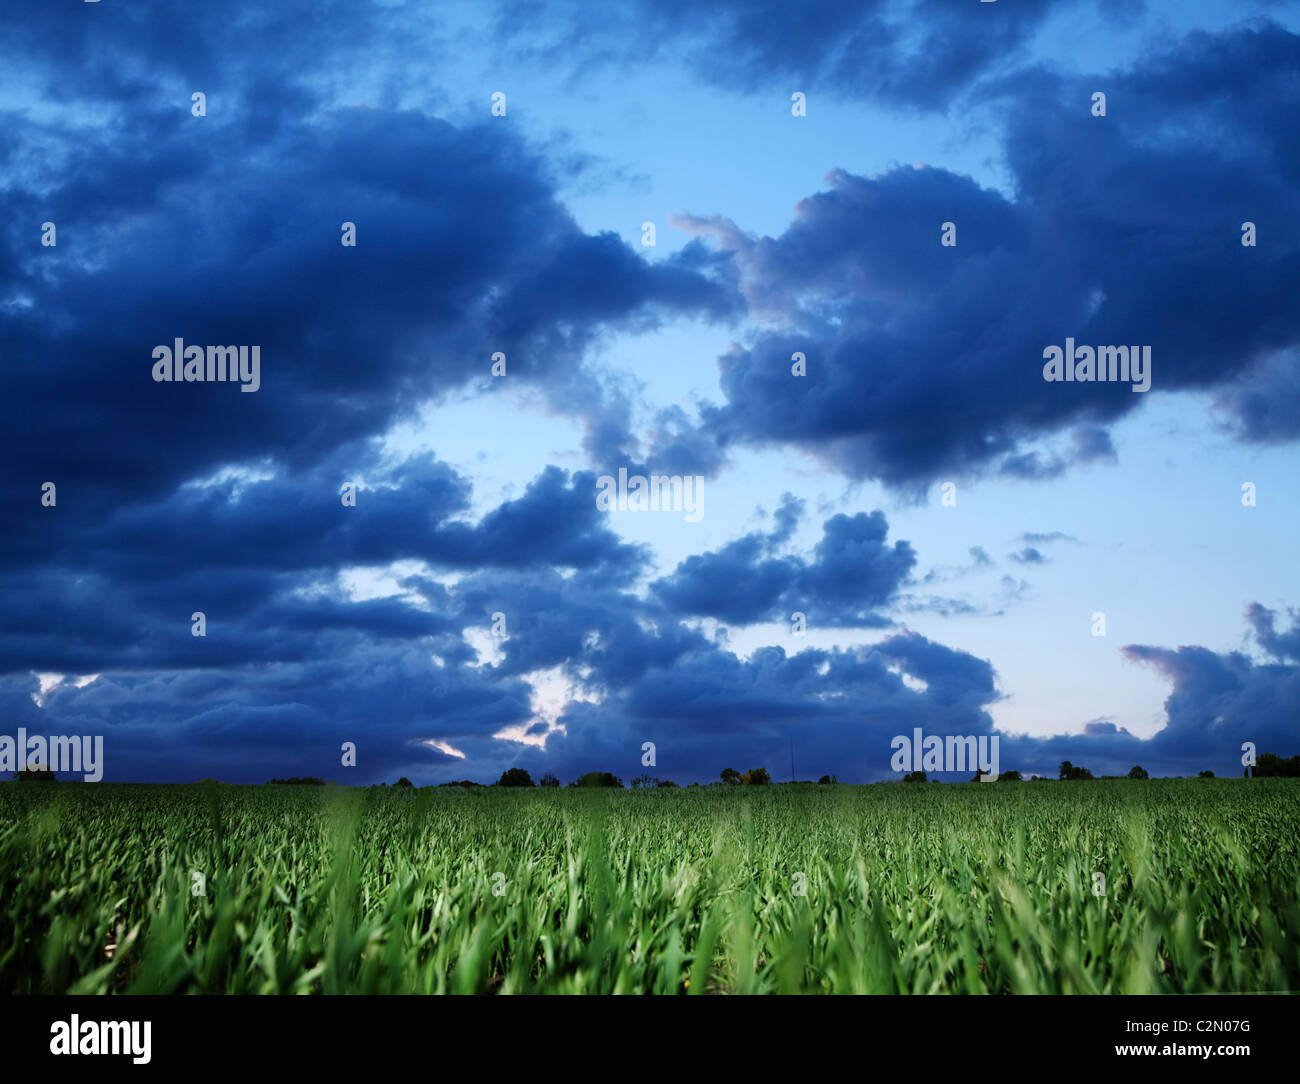 Wheat field and dark blue stormy sky. Stock Photo